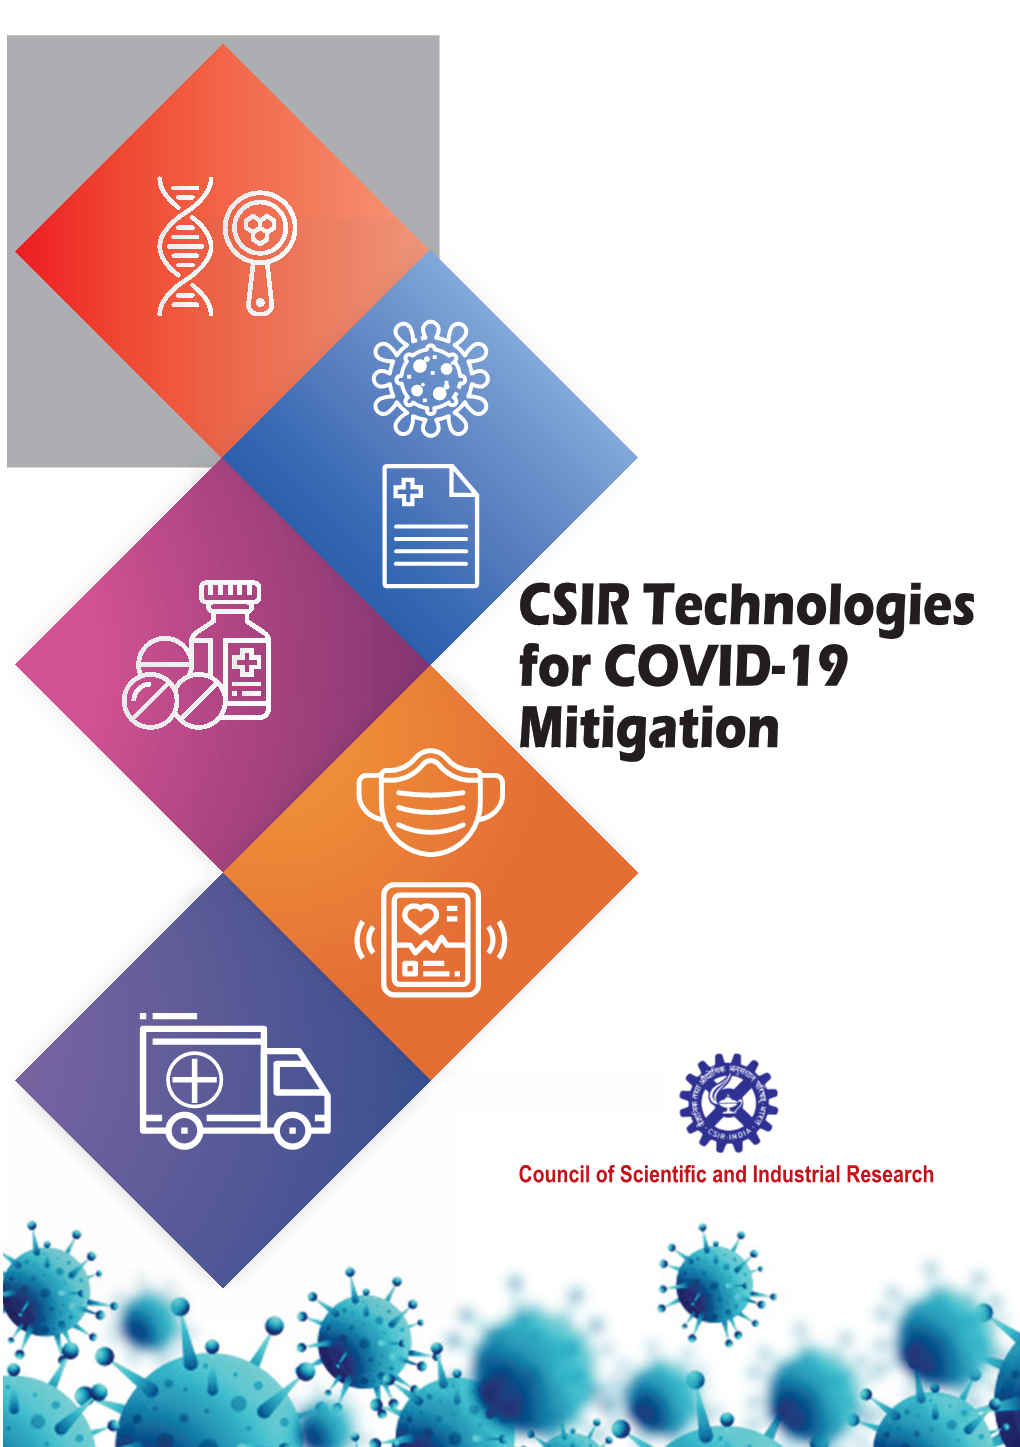 CSIR Technologies for COVID-19 Mitigation